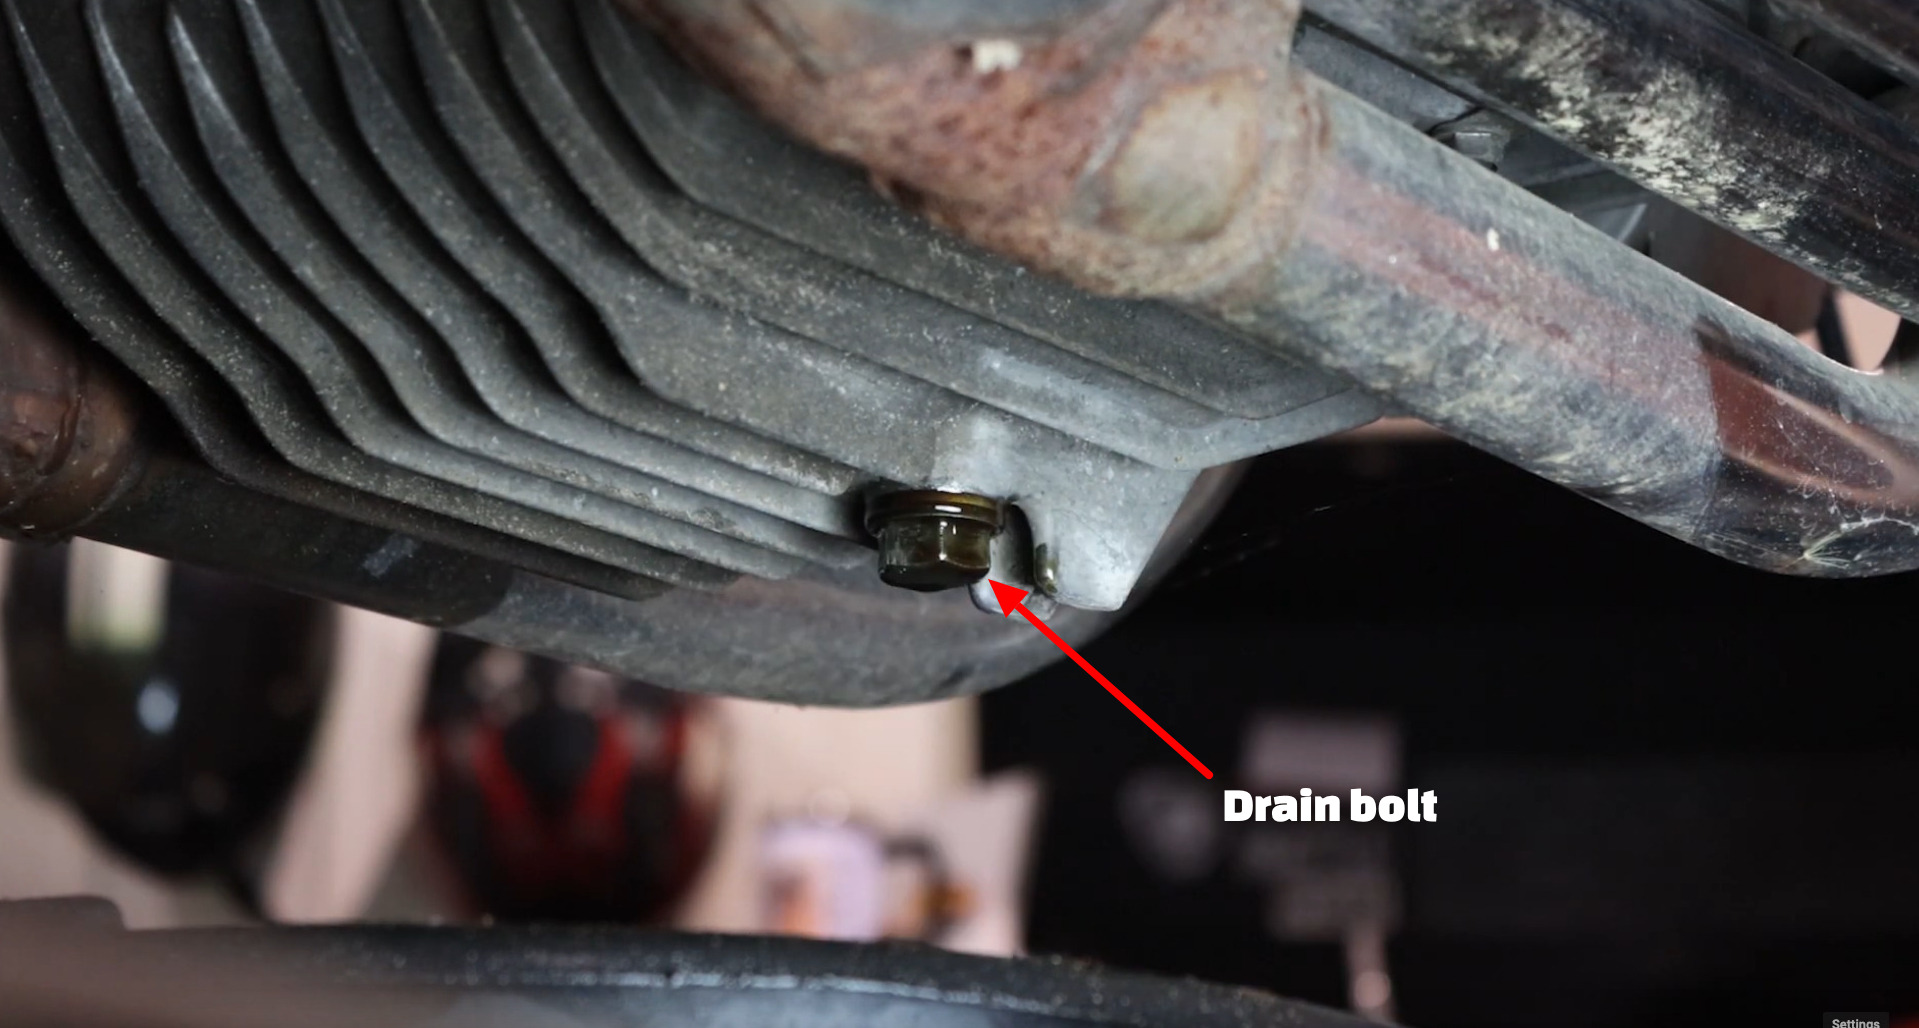 Honda CB750 oil drain bolt